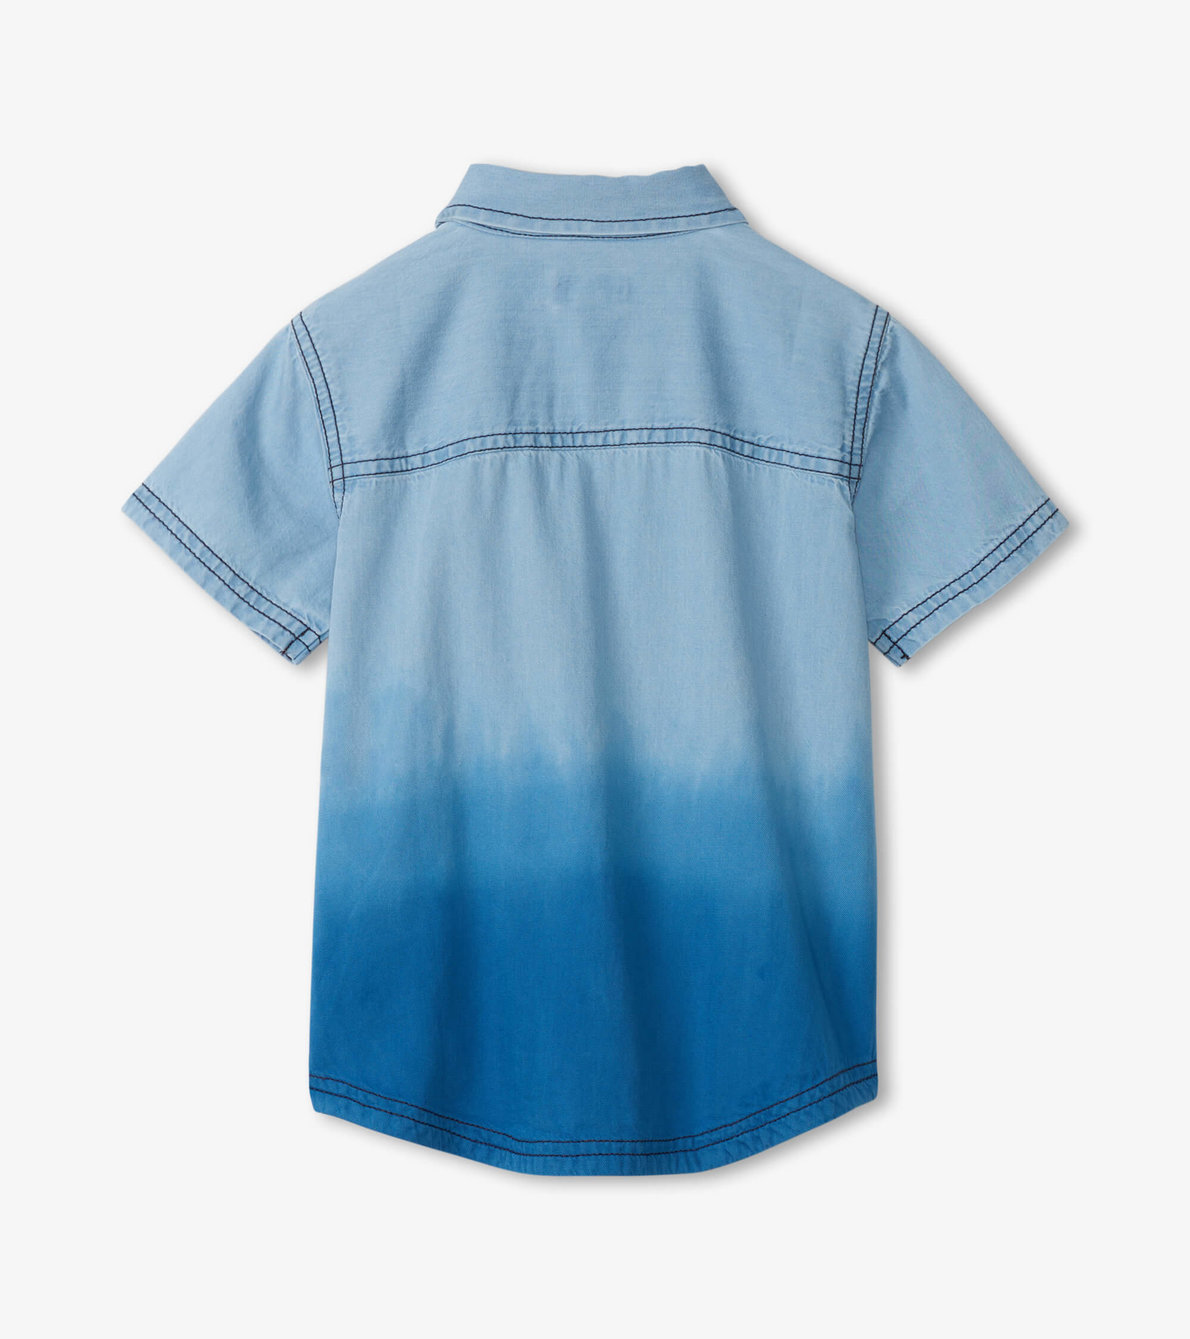 View larger image of Denim Dip Dye Short Sleeve Button Down Shirt